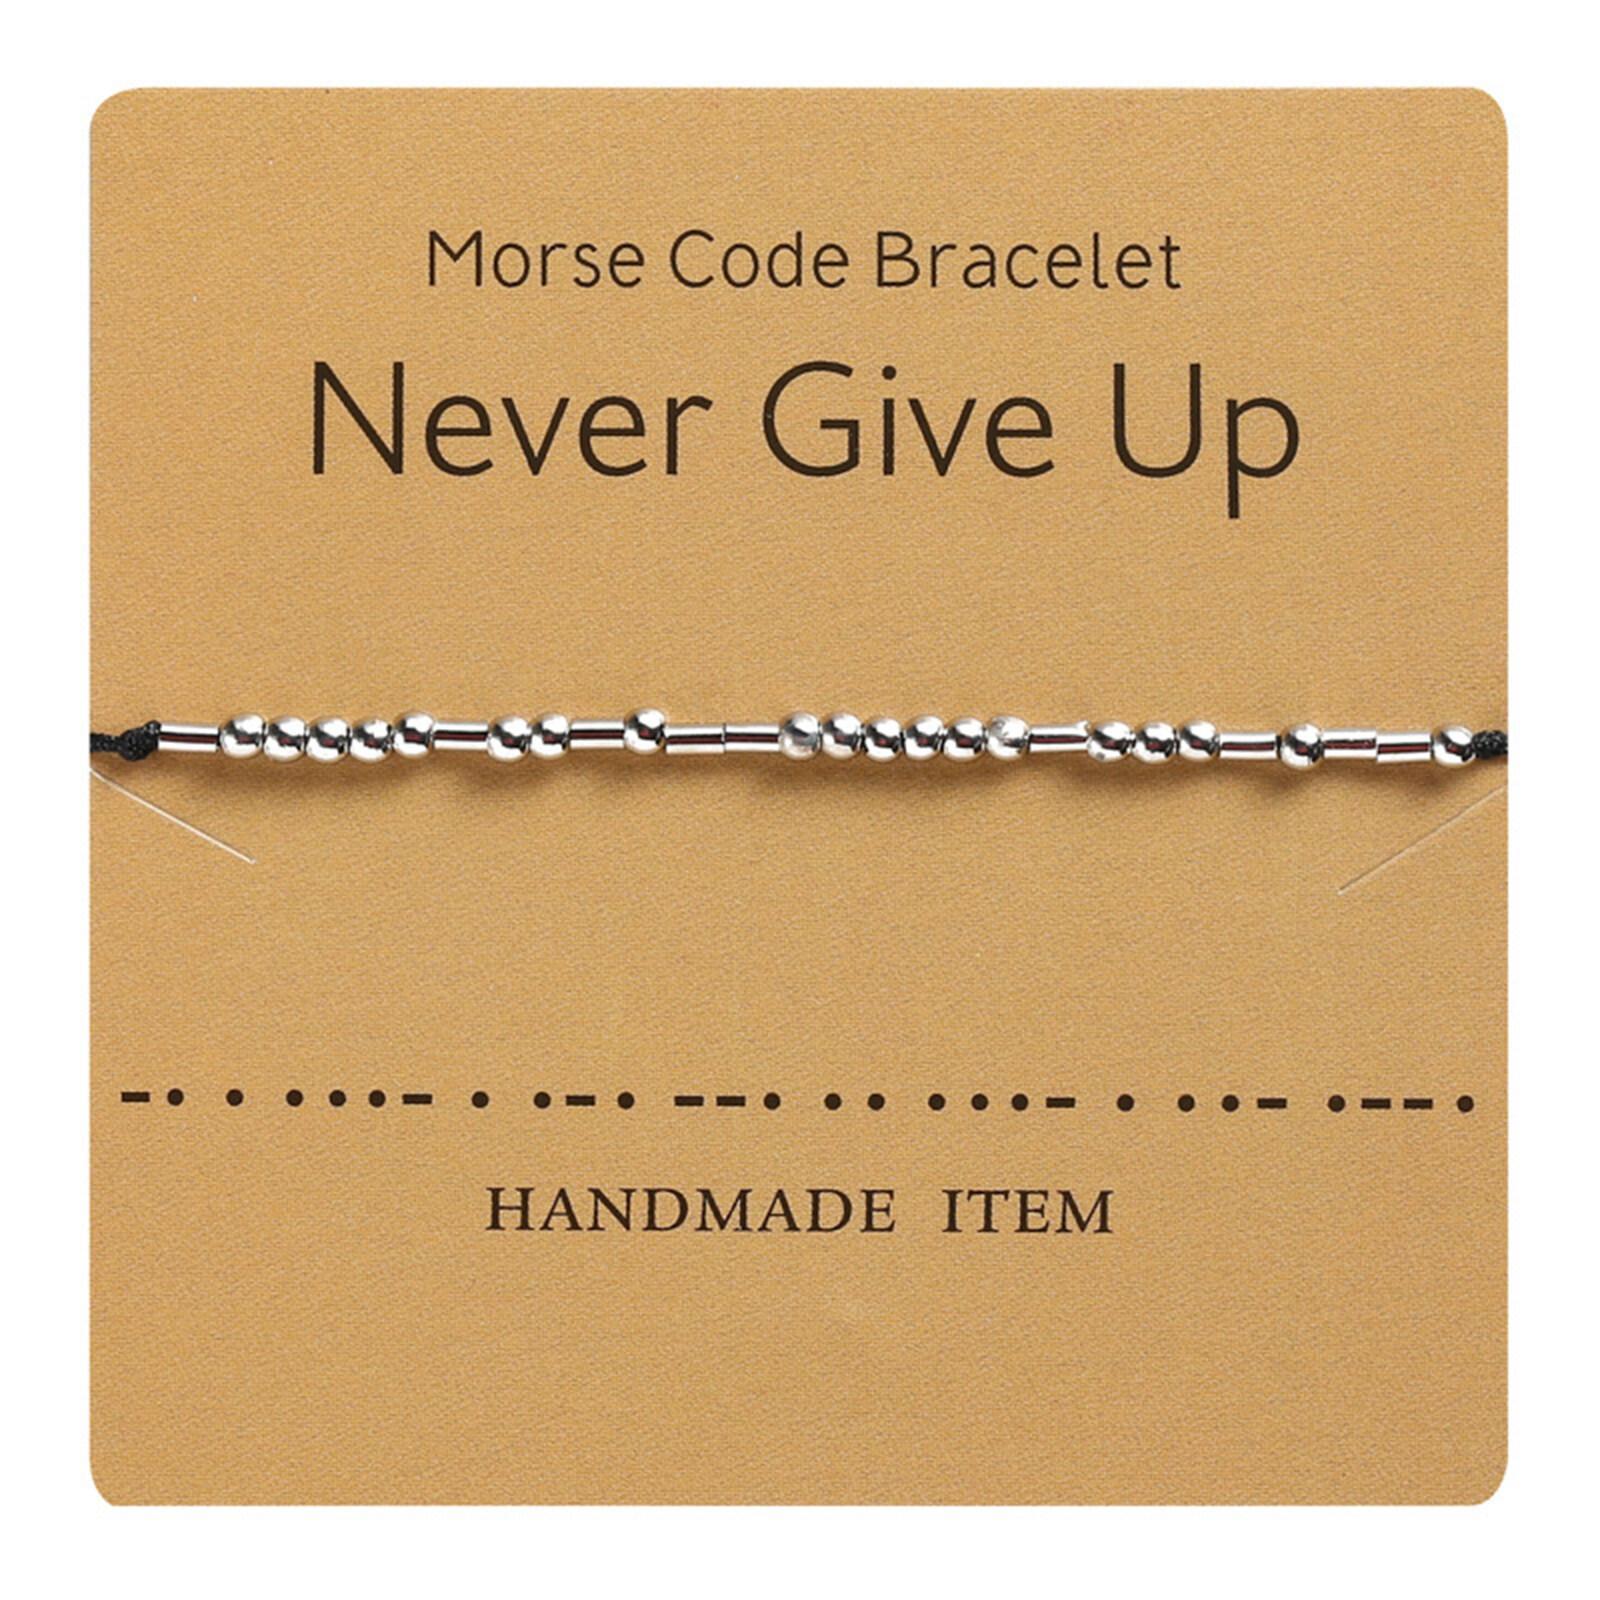 Bracelet for Man Woman Couple Morse Code Bracelet Jewelry Gift Handmade Bracelet Adjutable Size